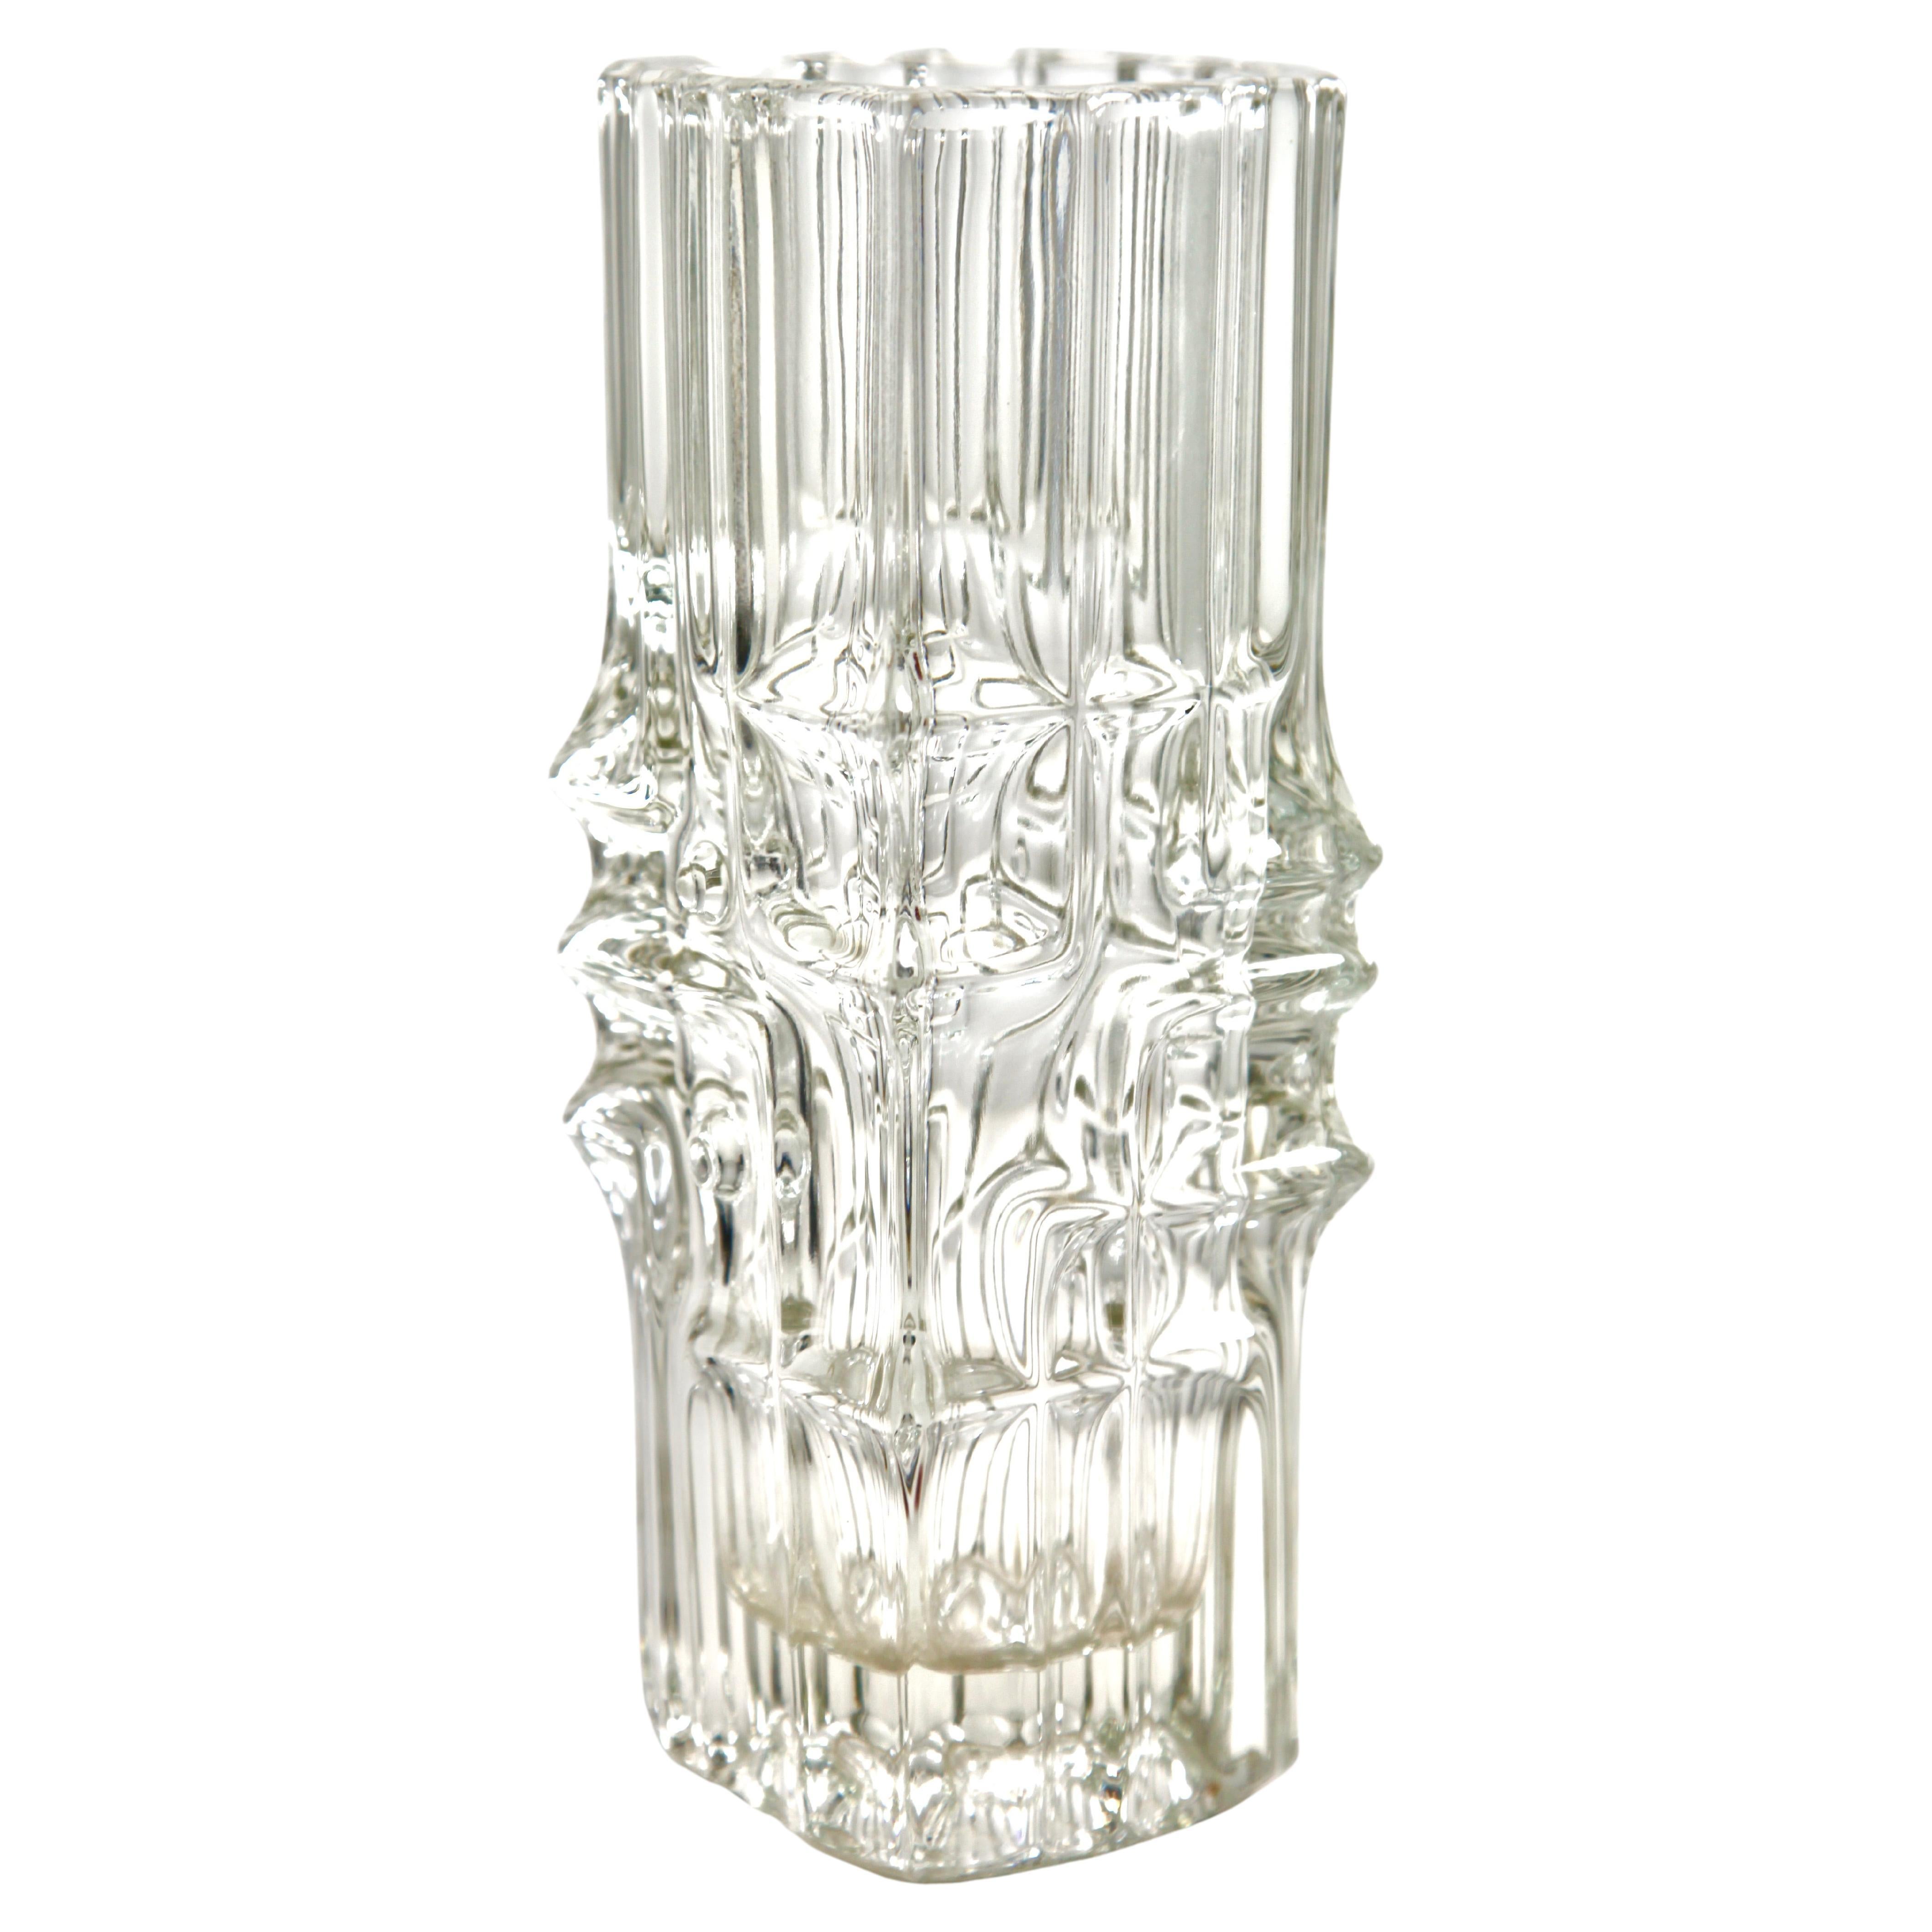 Ice Melting Vase 617 by Vladislaw Urban for Rosice Glass Tsjechoslowakia, 1968